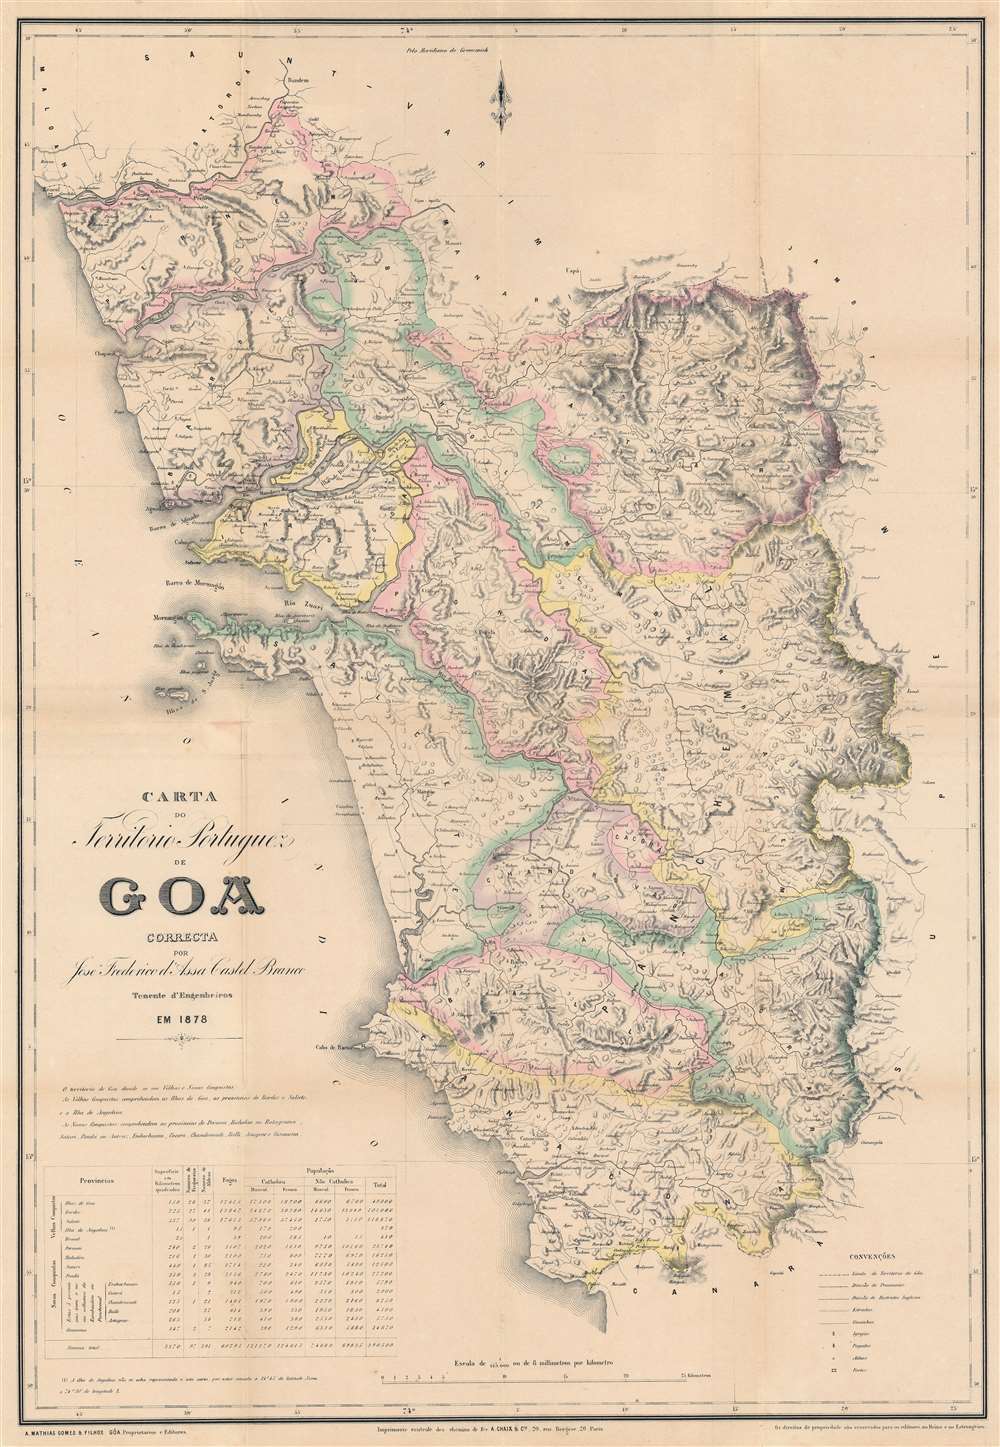 Carta do Territorio Portuguez de Goa Correcta port jose Frederico d'Assa Castel Branco. - Main View